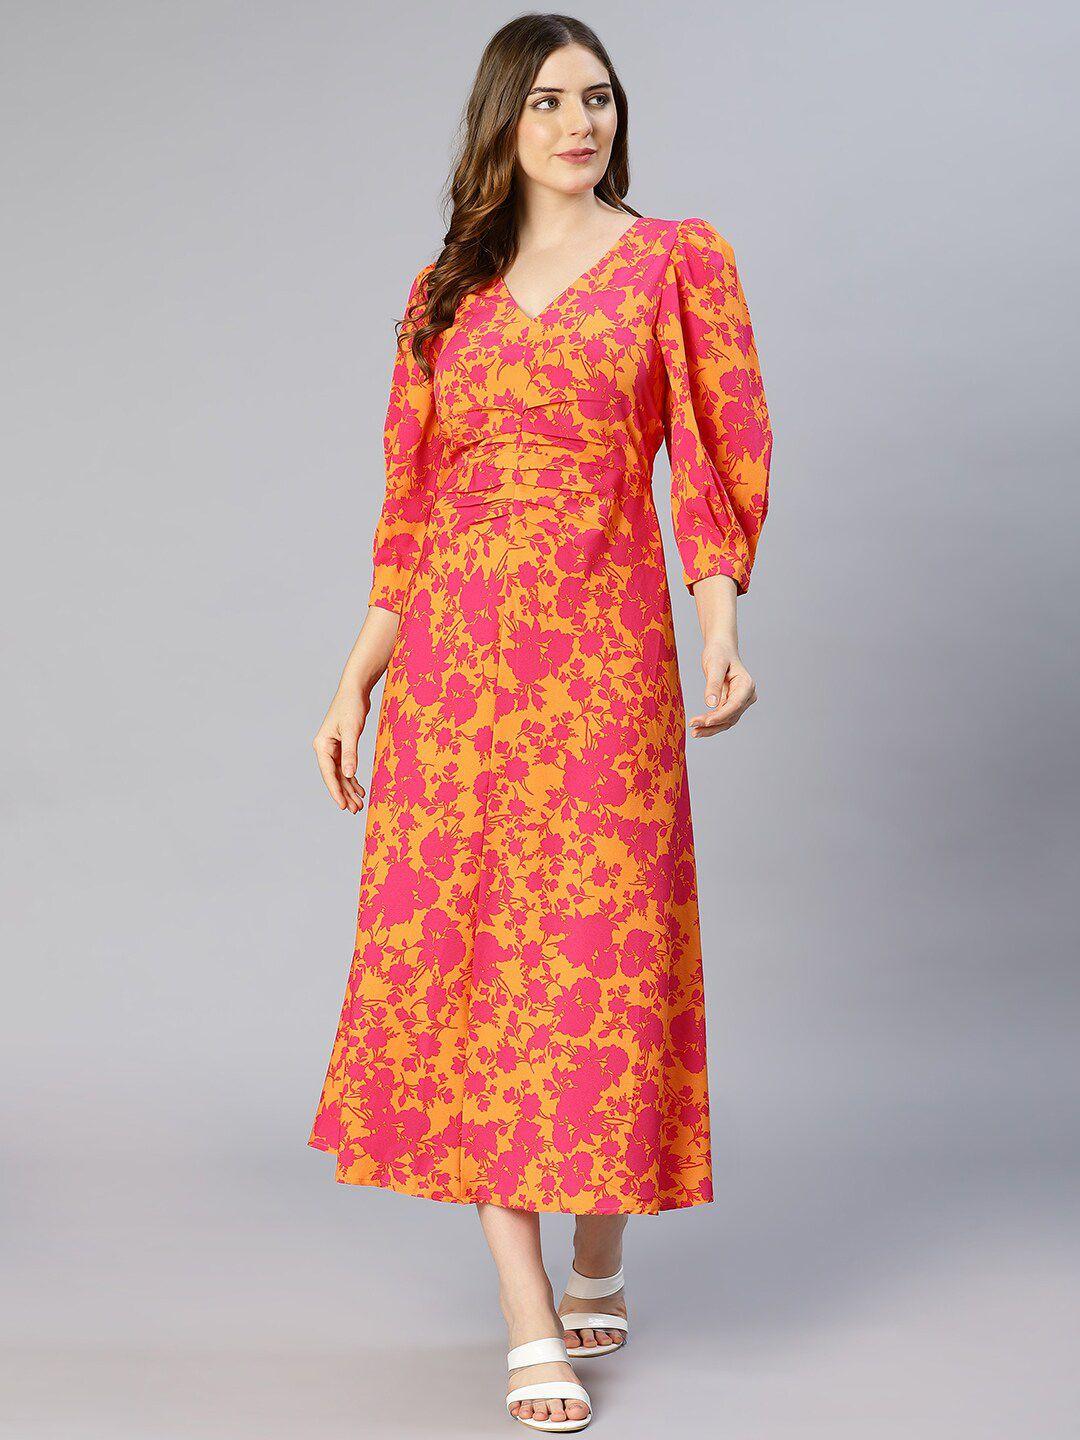 oxolloxo orange floral printed satin midi dress